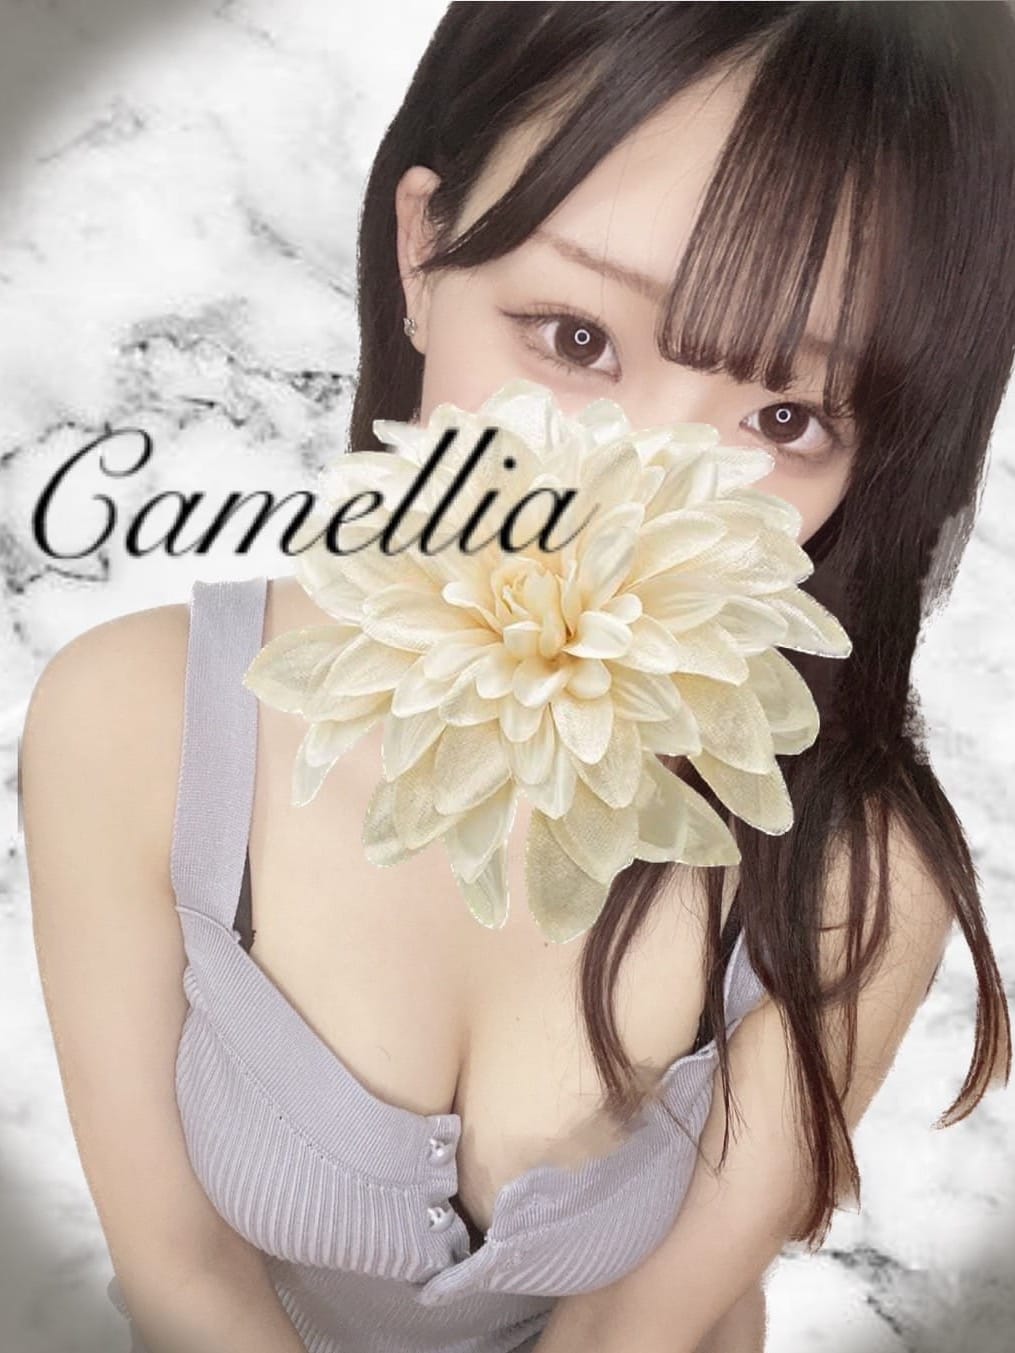 Camellia (カメリア) きらり